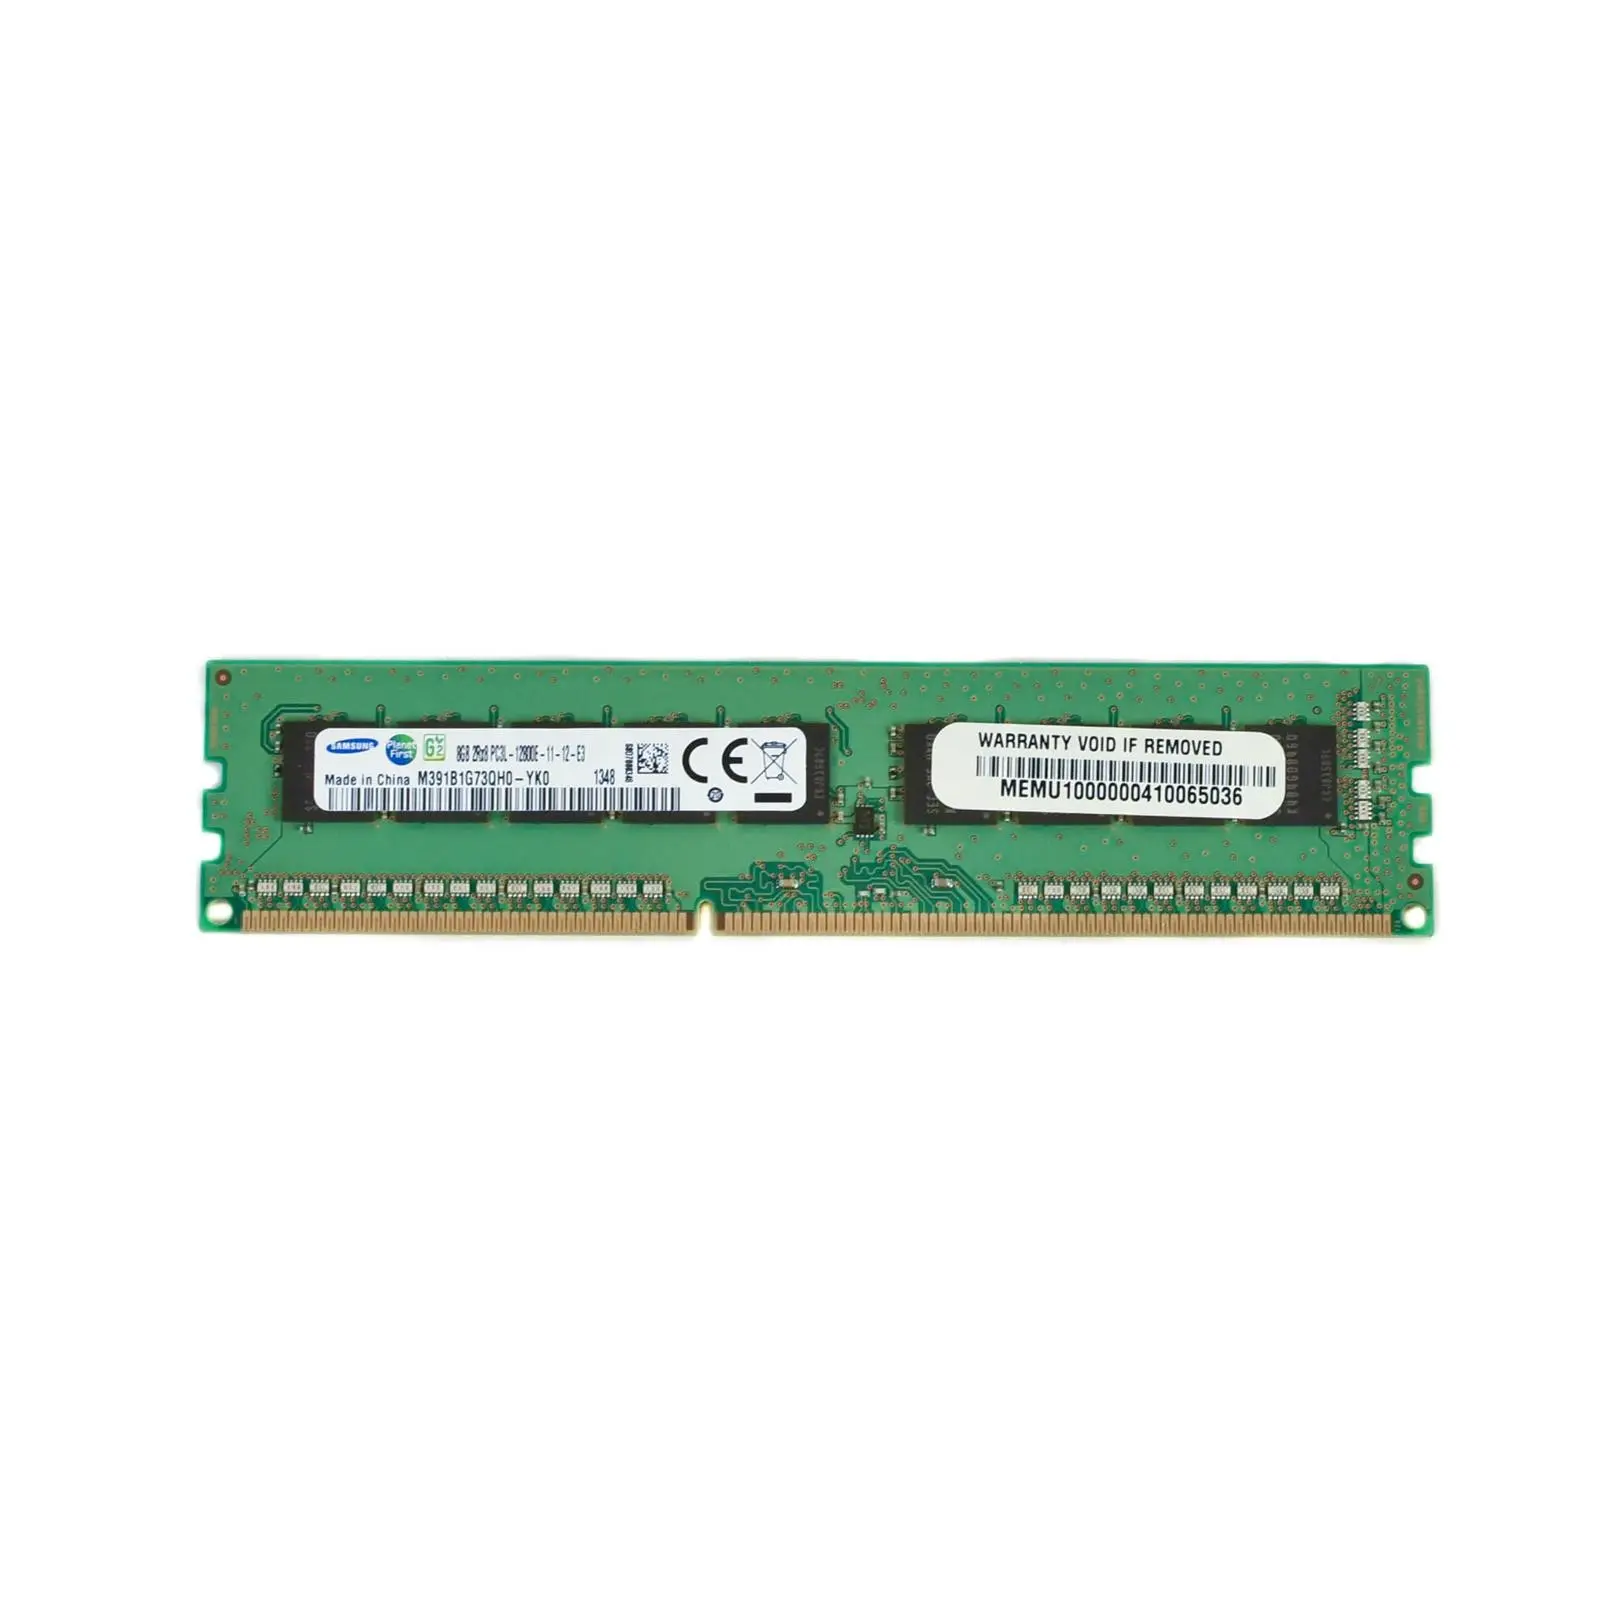 8GB DDR3 1600 ECC UDIMM M391B1G73QH0-YK0 memory For Desktop and Servers